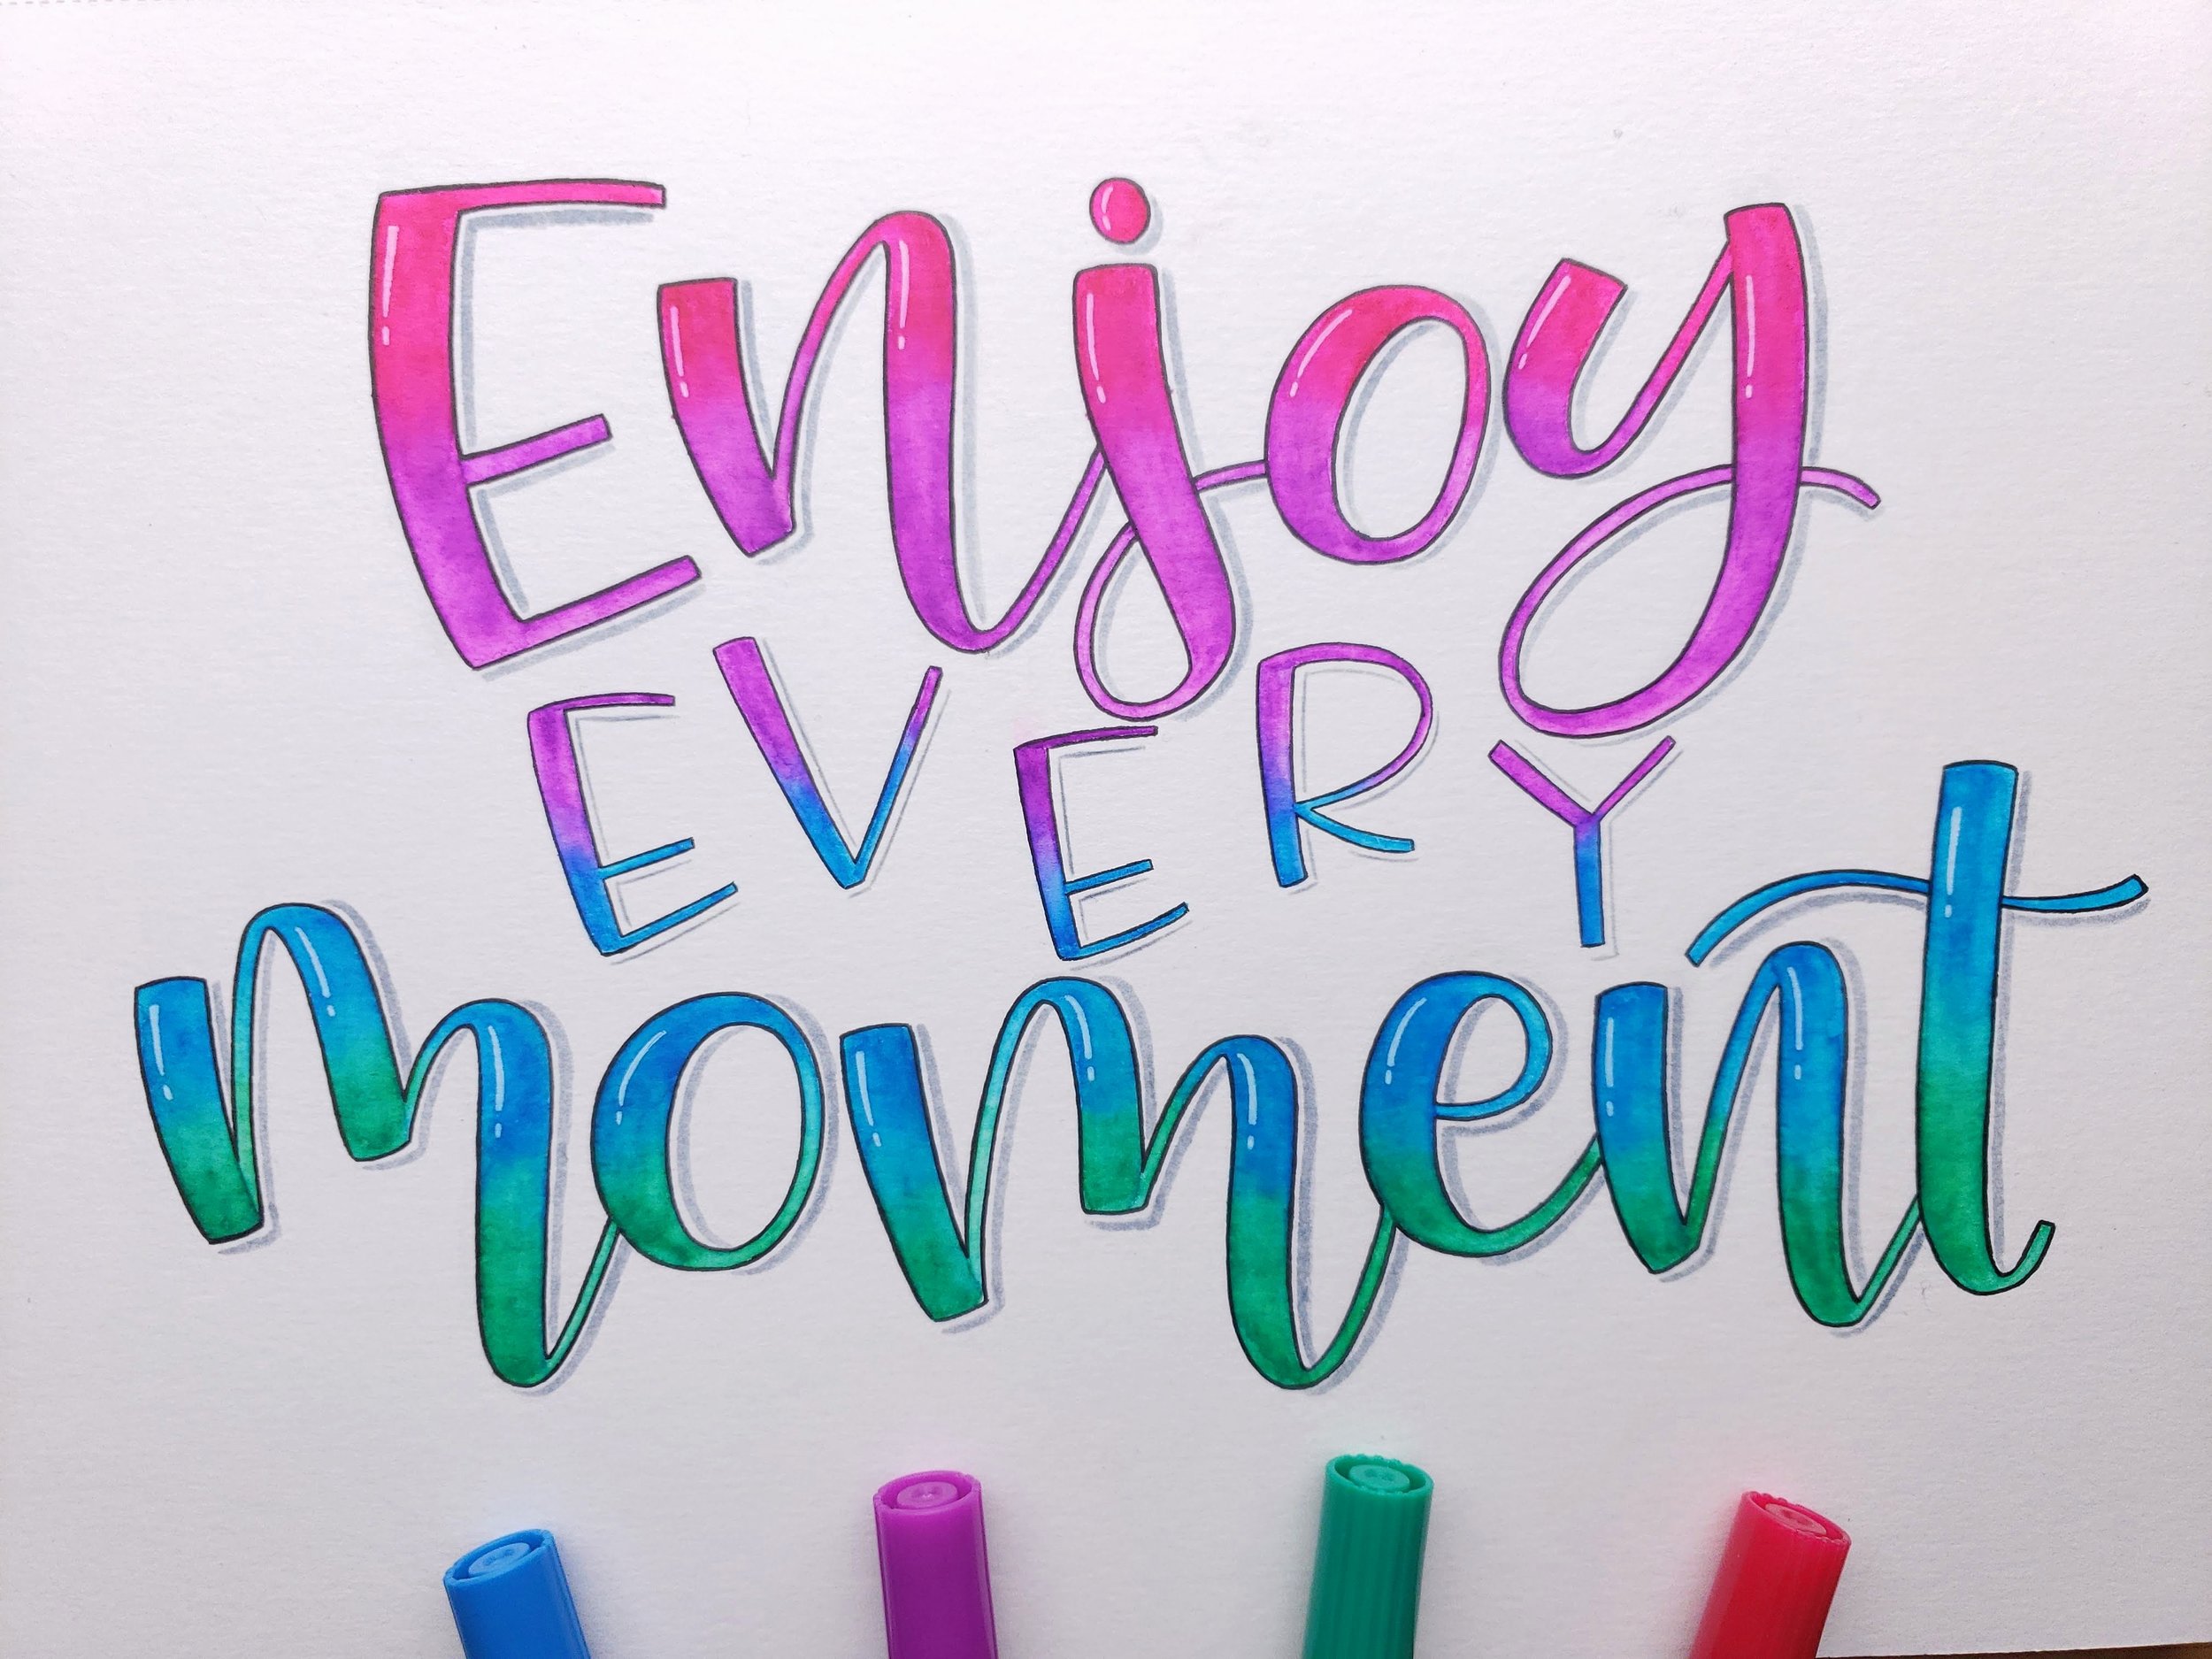 Enjoy every moment, emotionspersonalised